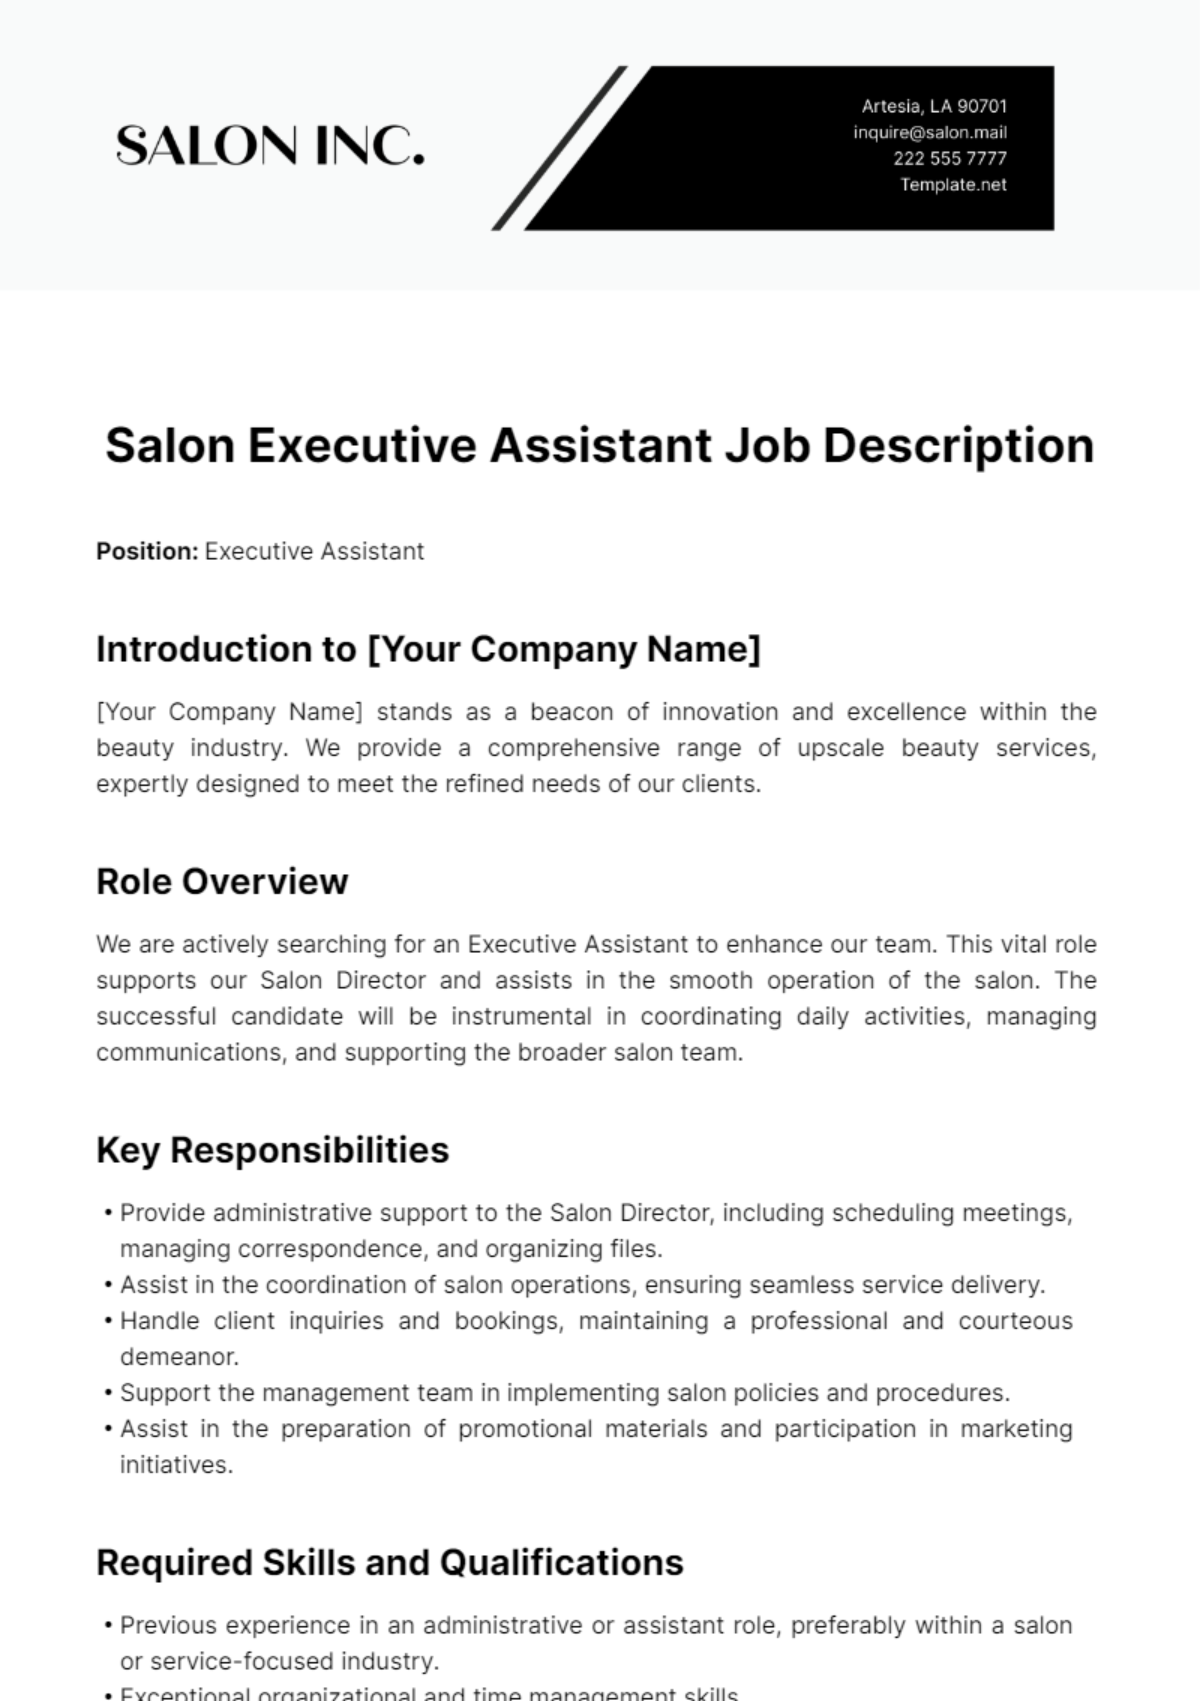 Salon Executive Assistant Job Description Template